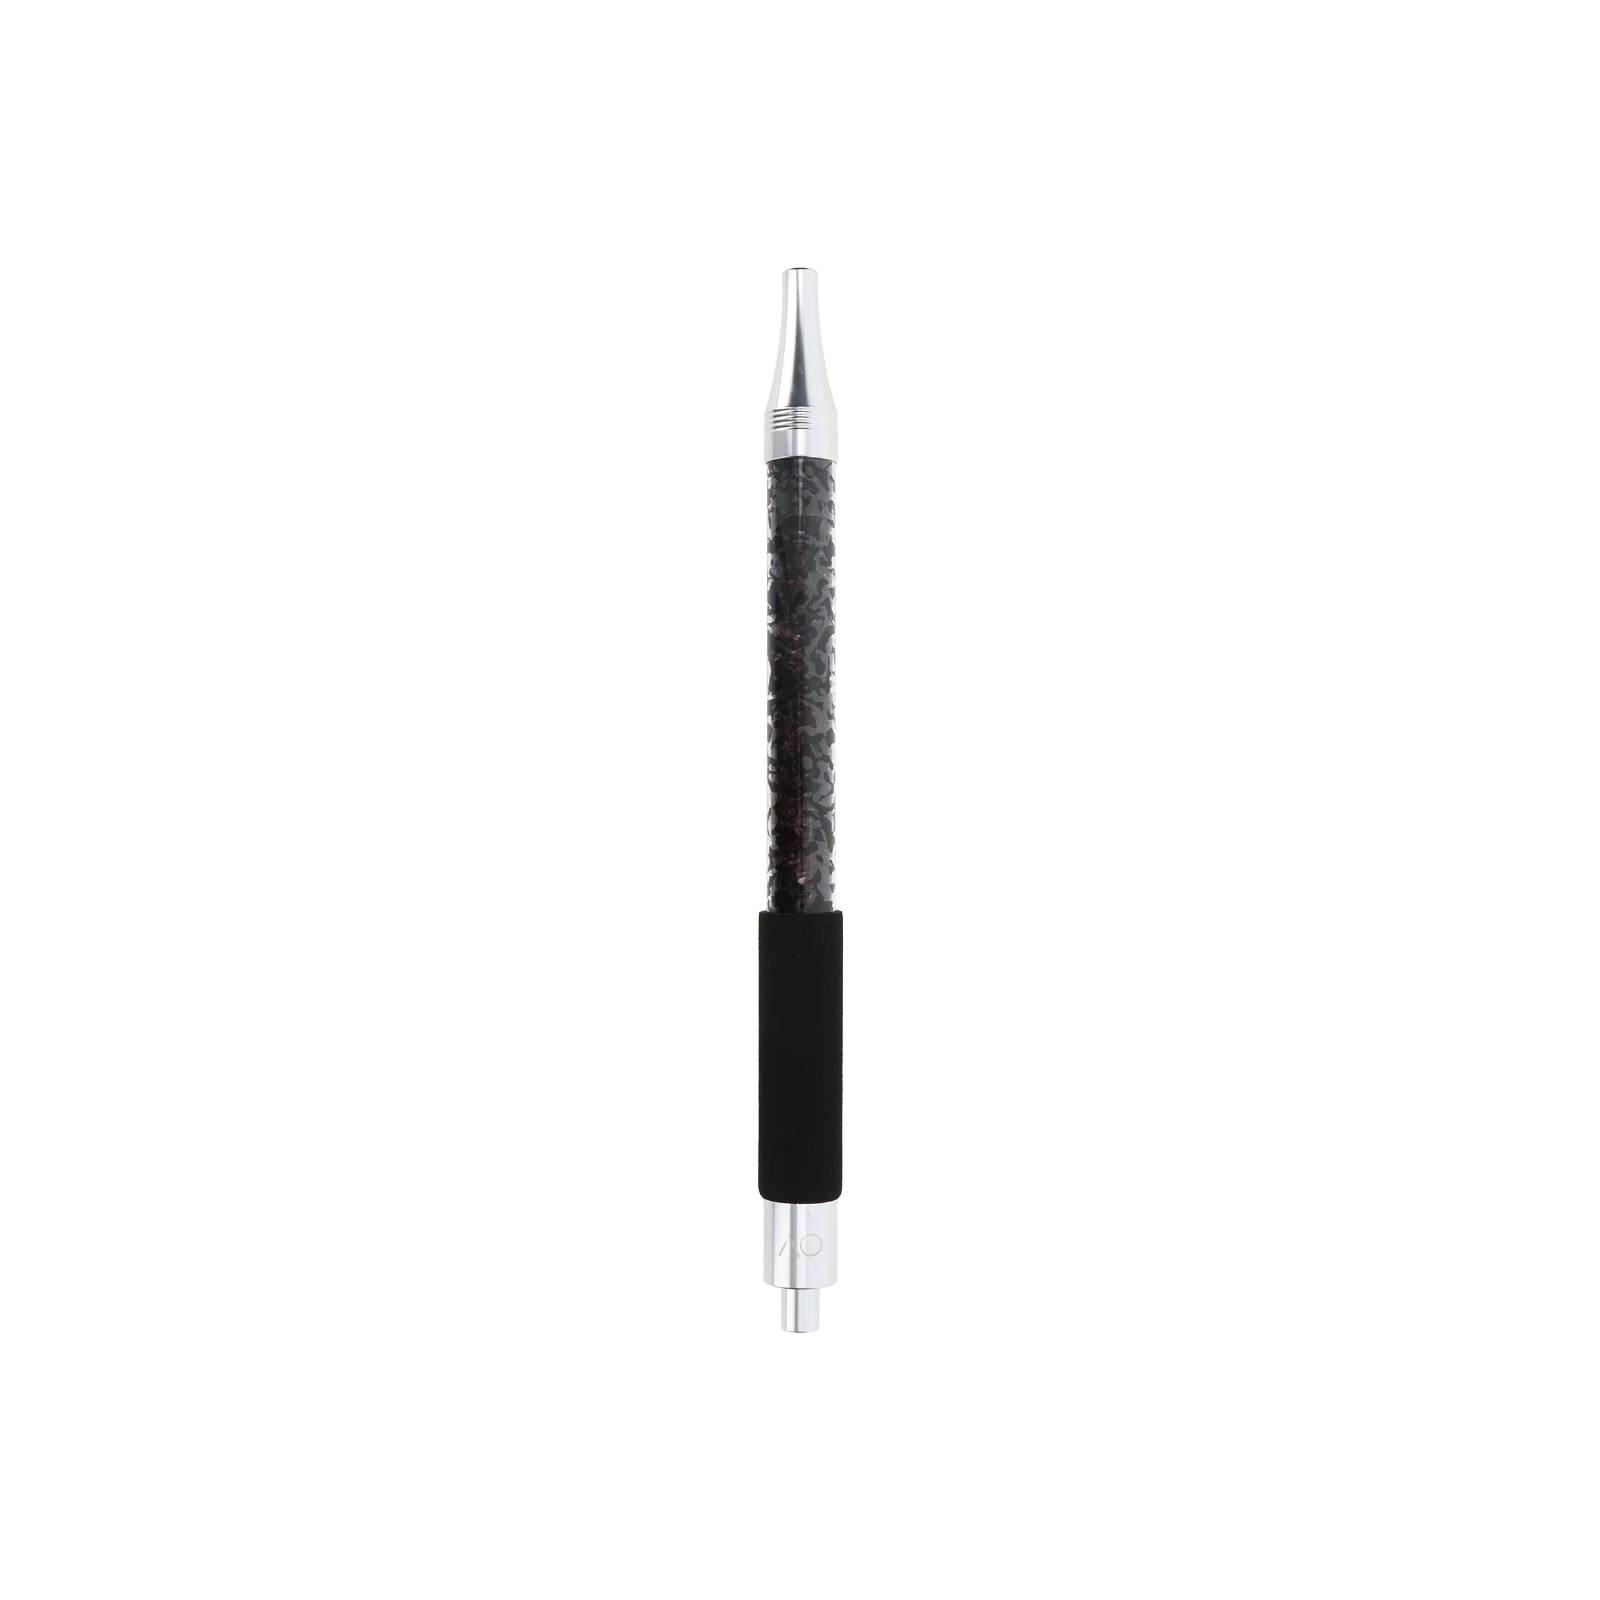 AO - ICE Stick - Ice Mouthpiece - 38.5 cm - Black